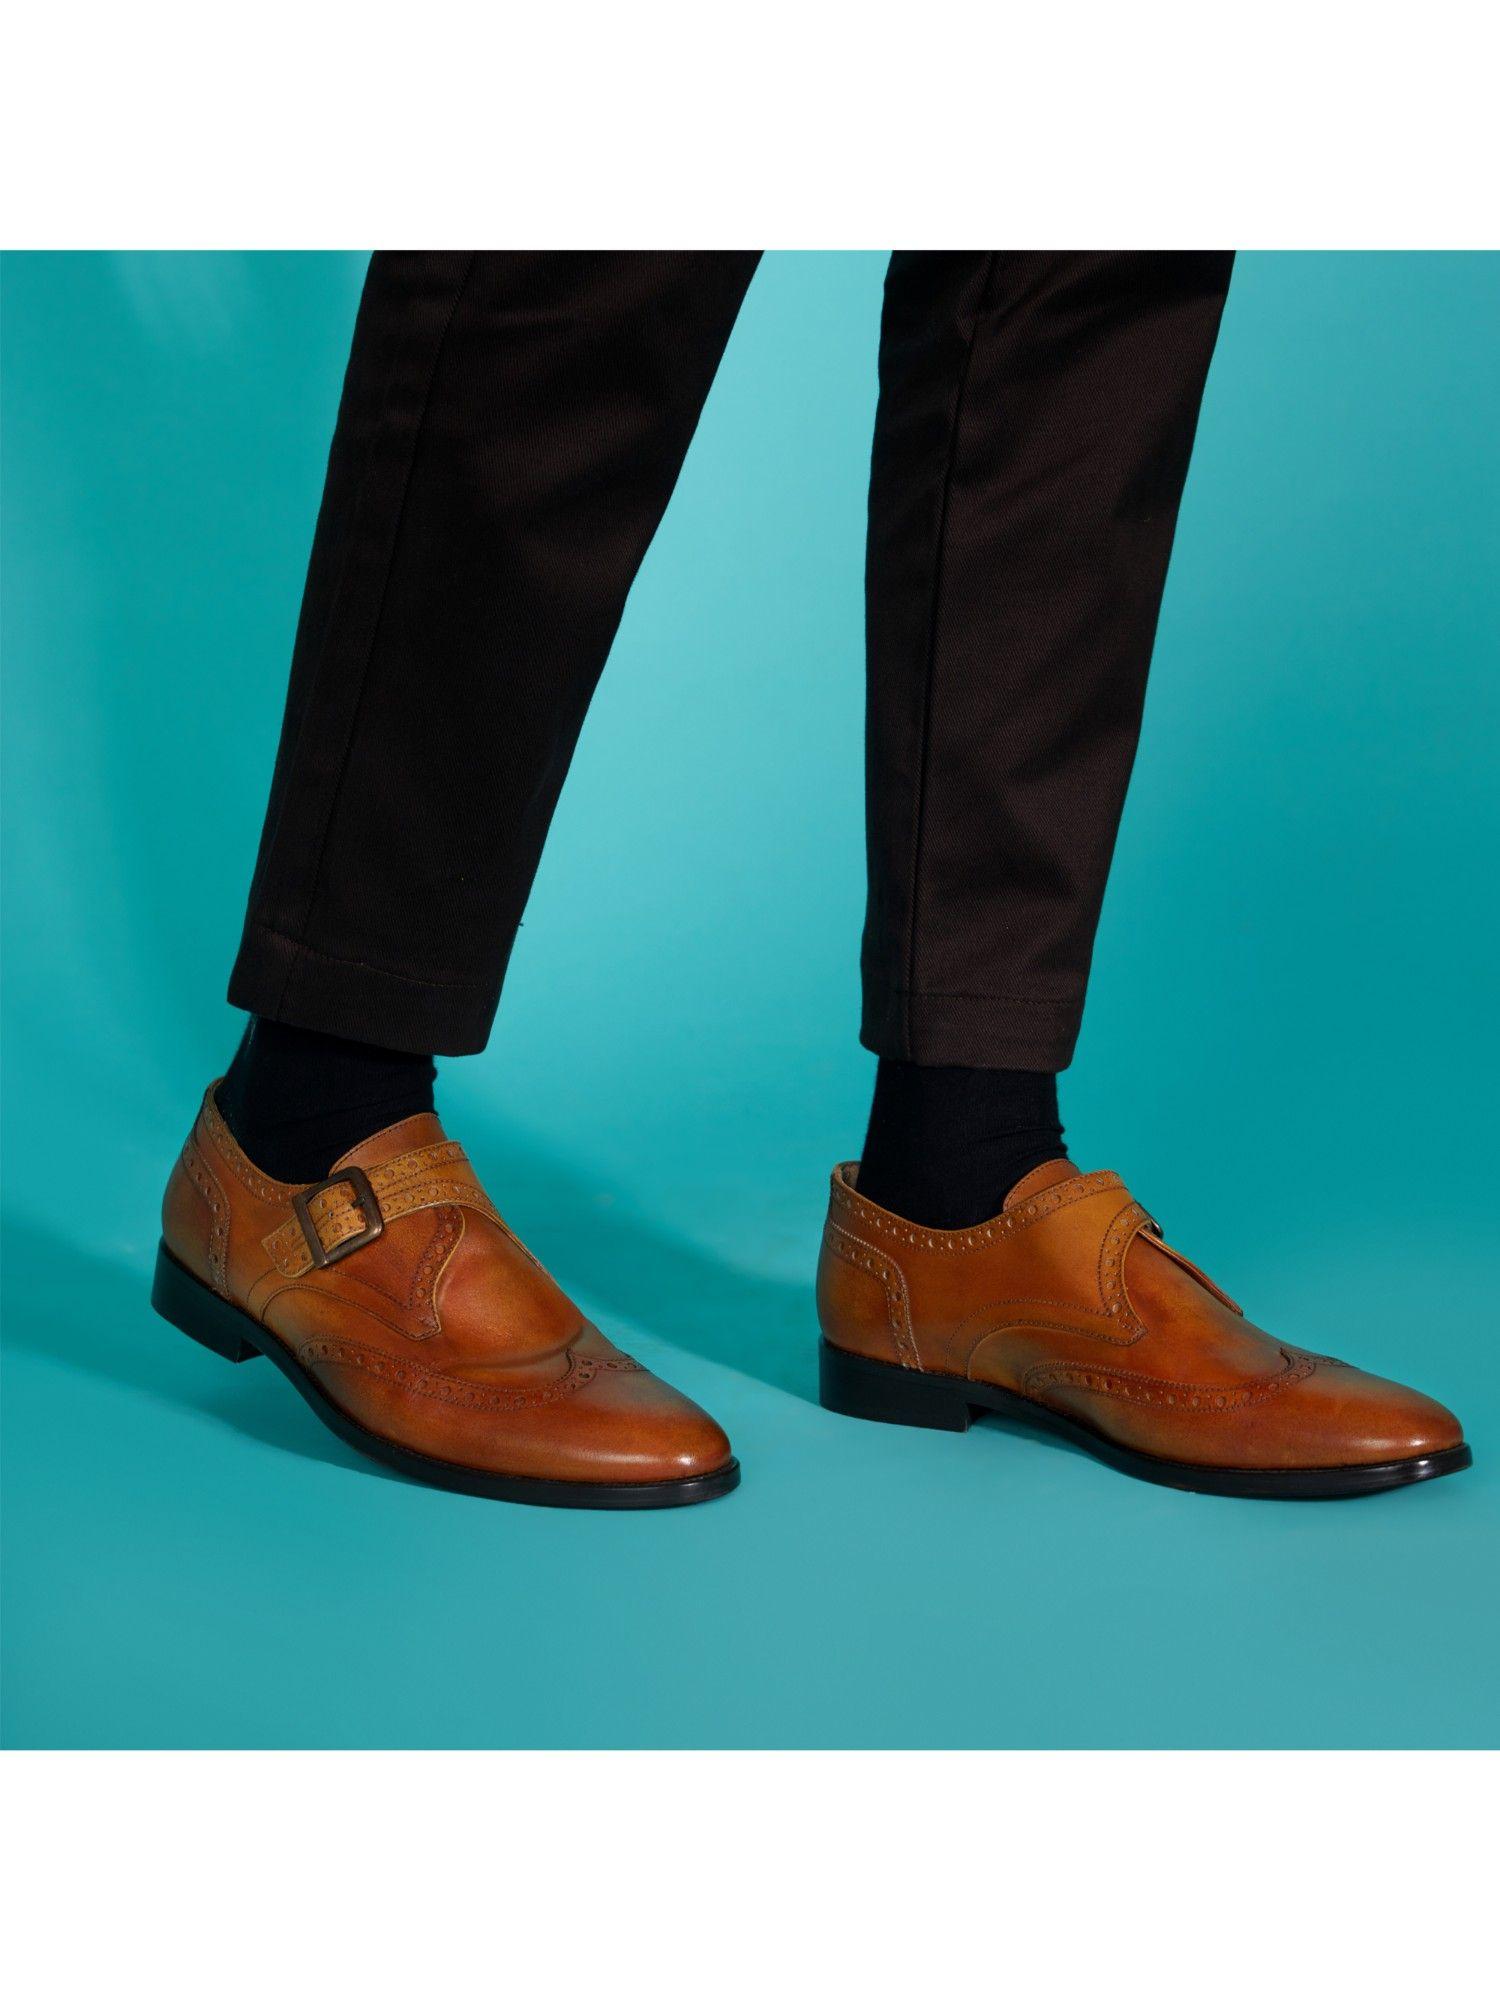 gerardo tan leather single monk straps brogue shoes